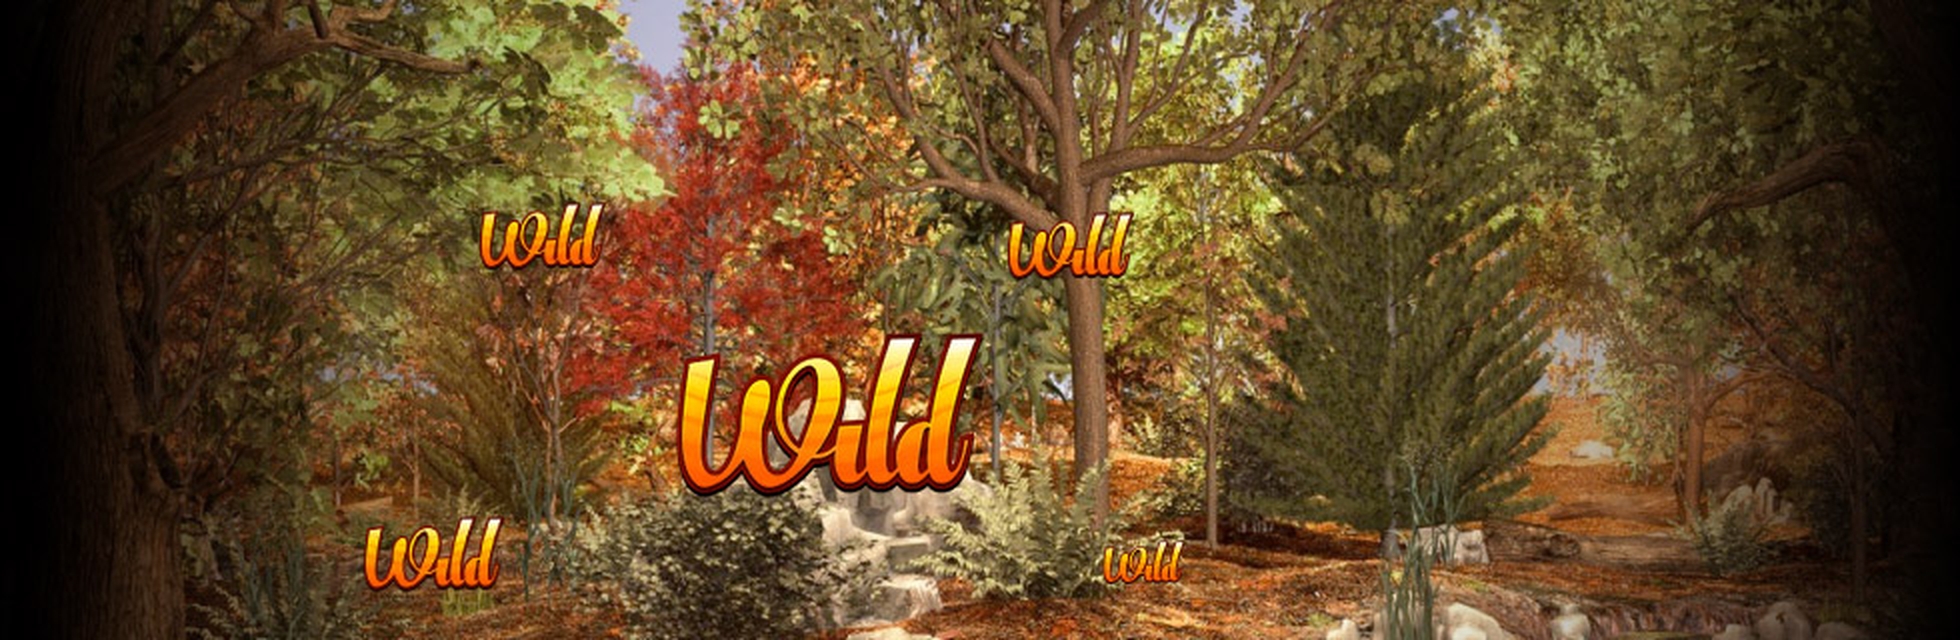 The Wild Wood™ demo